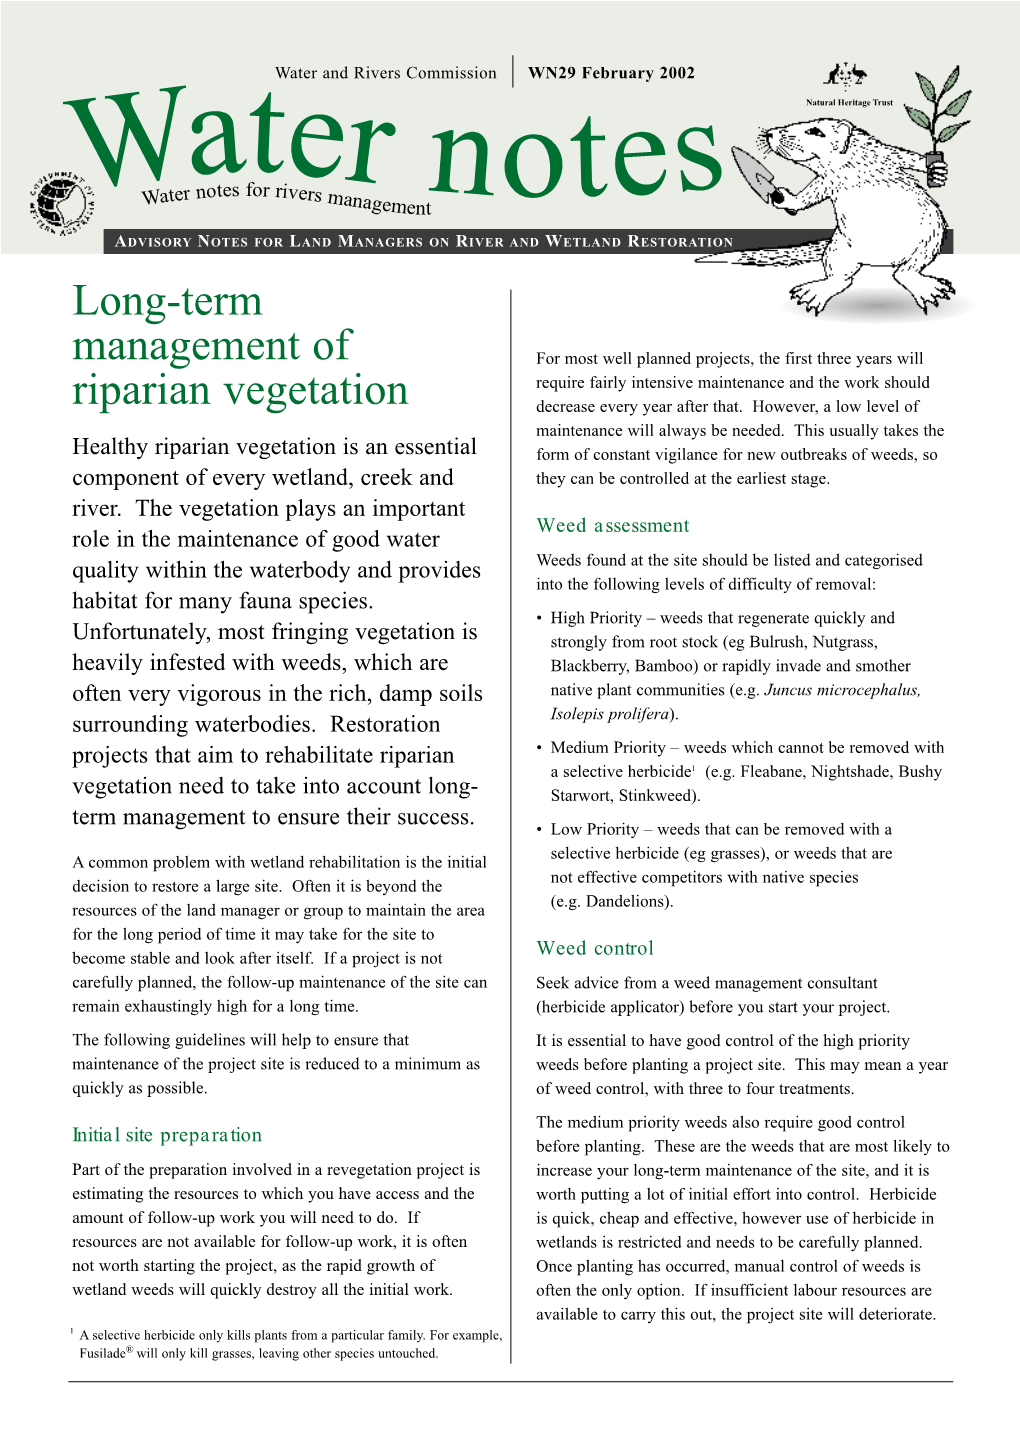 Long-Term Management of Riparian Vegetation